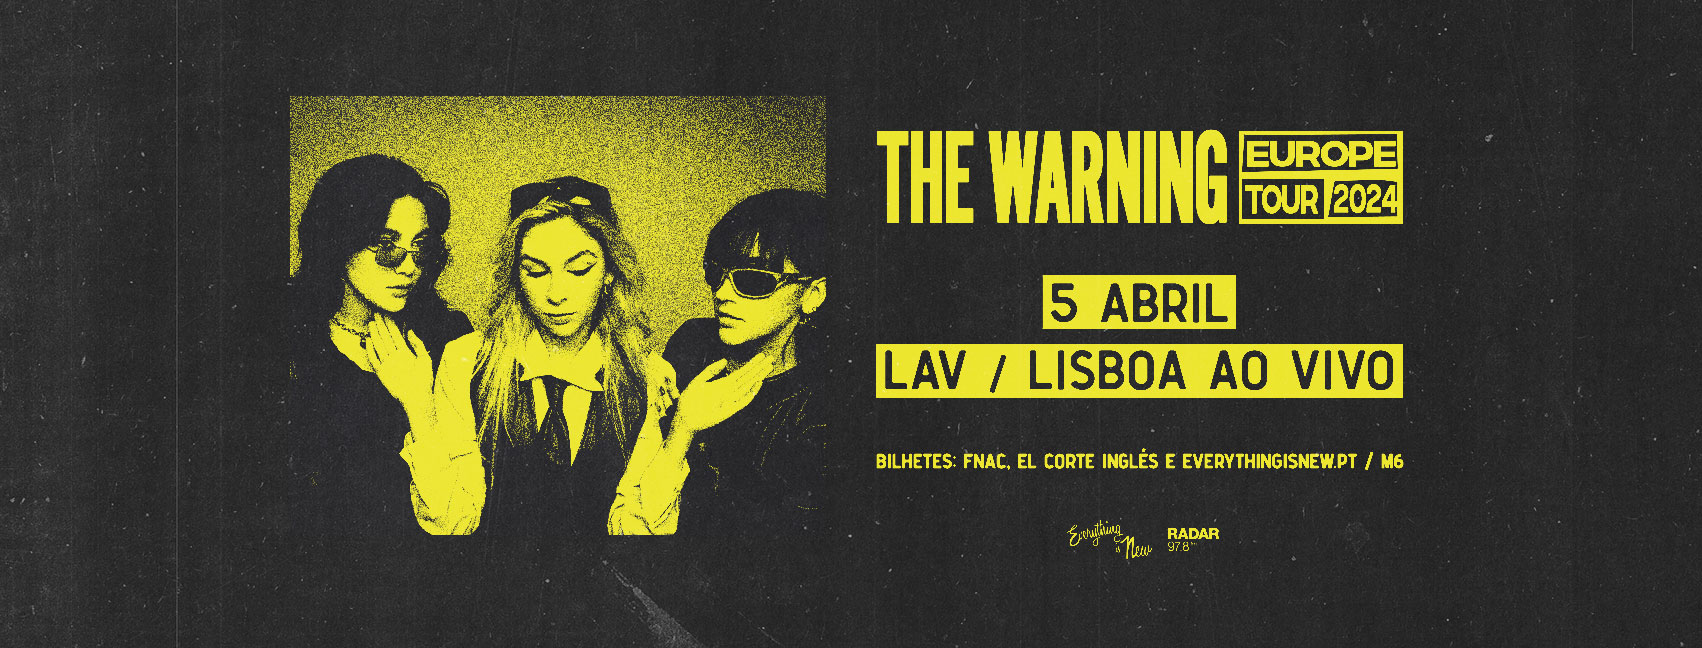 the warning portugal lisboa ao vivo 2024